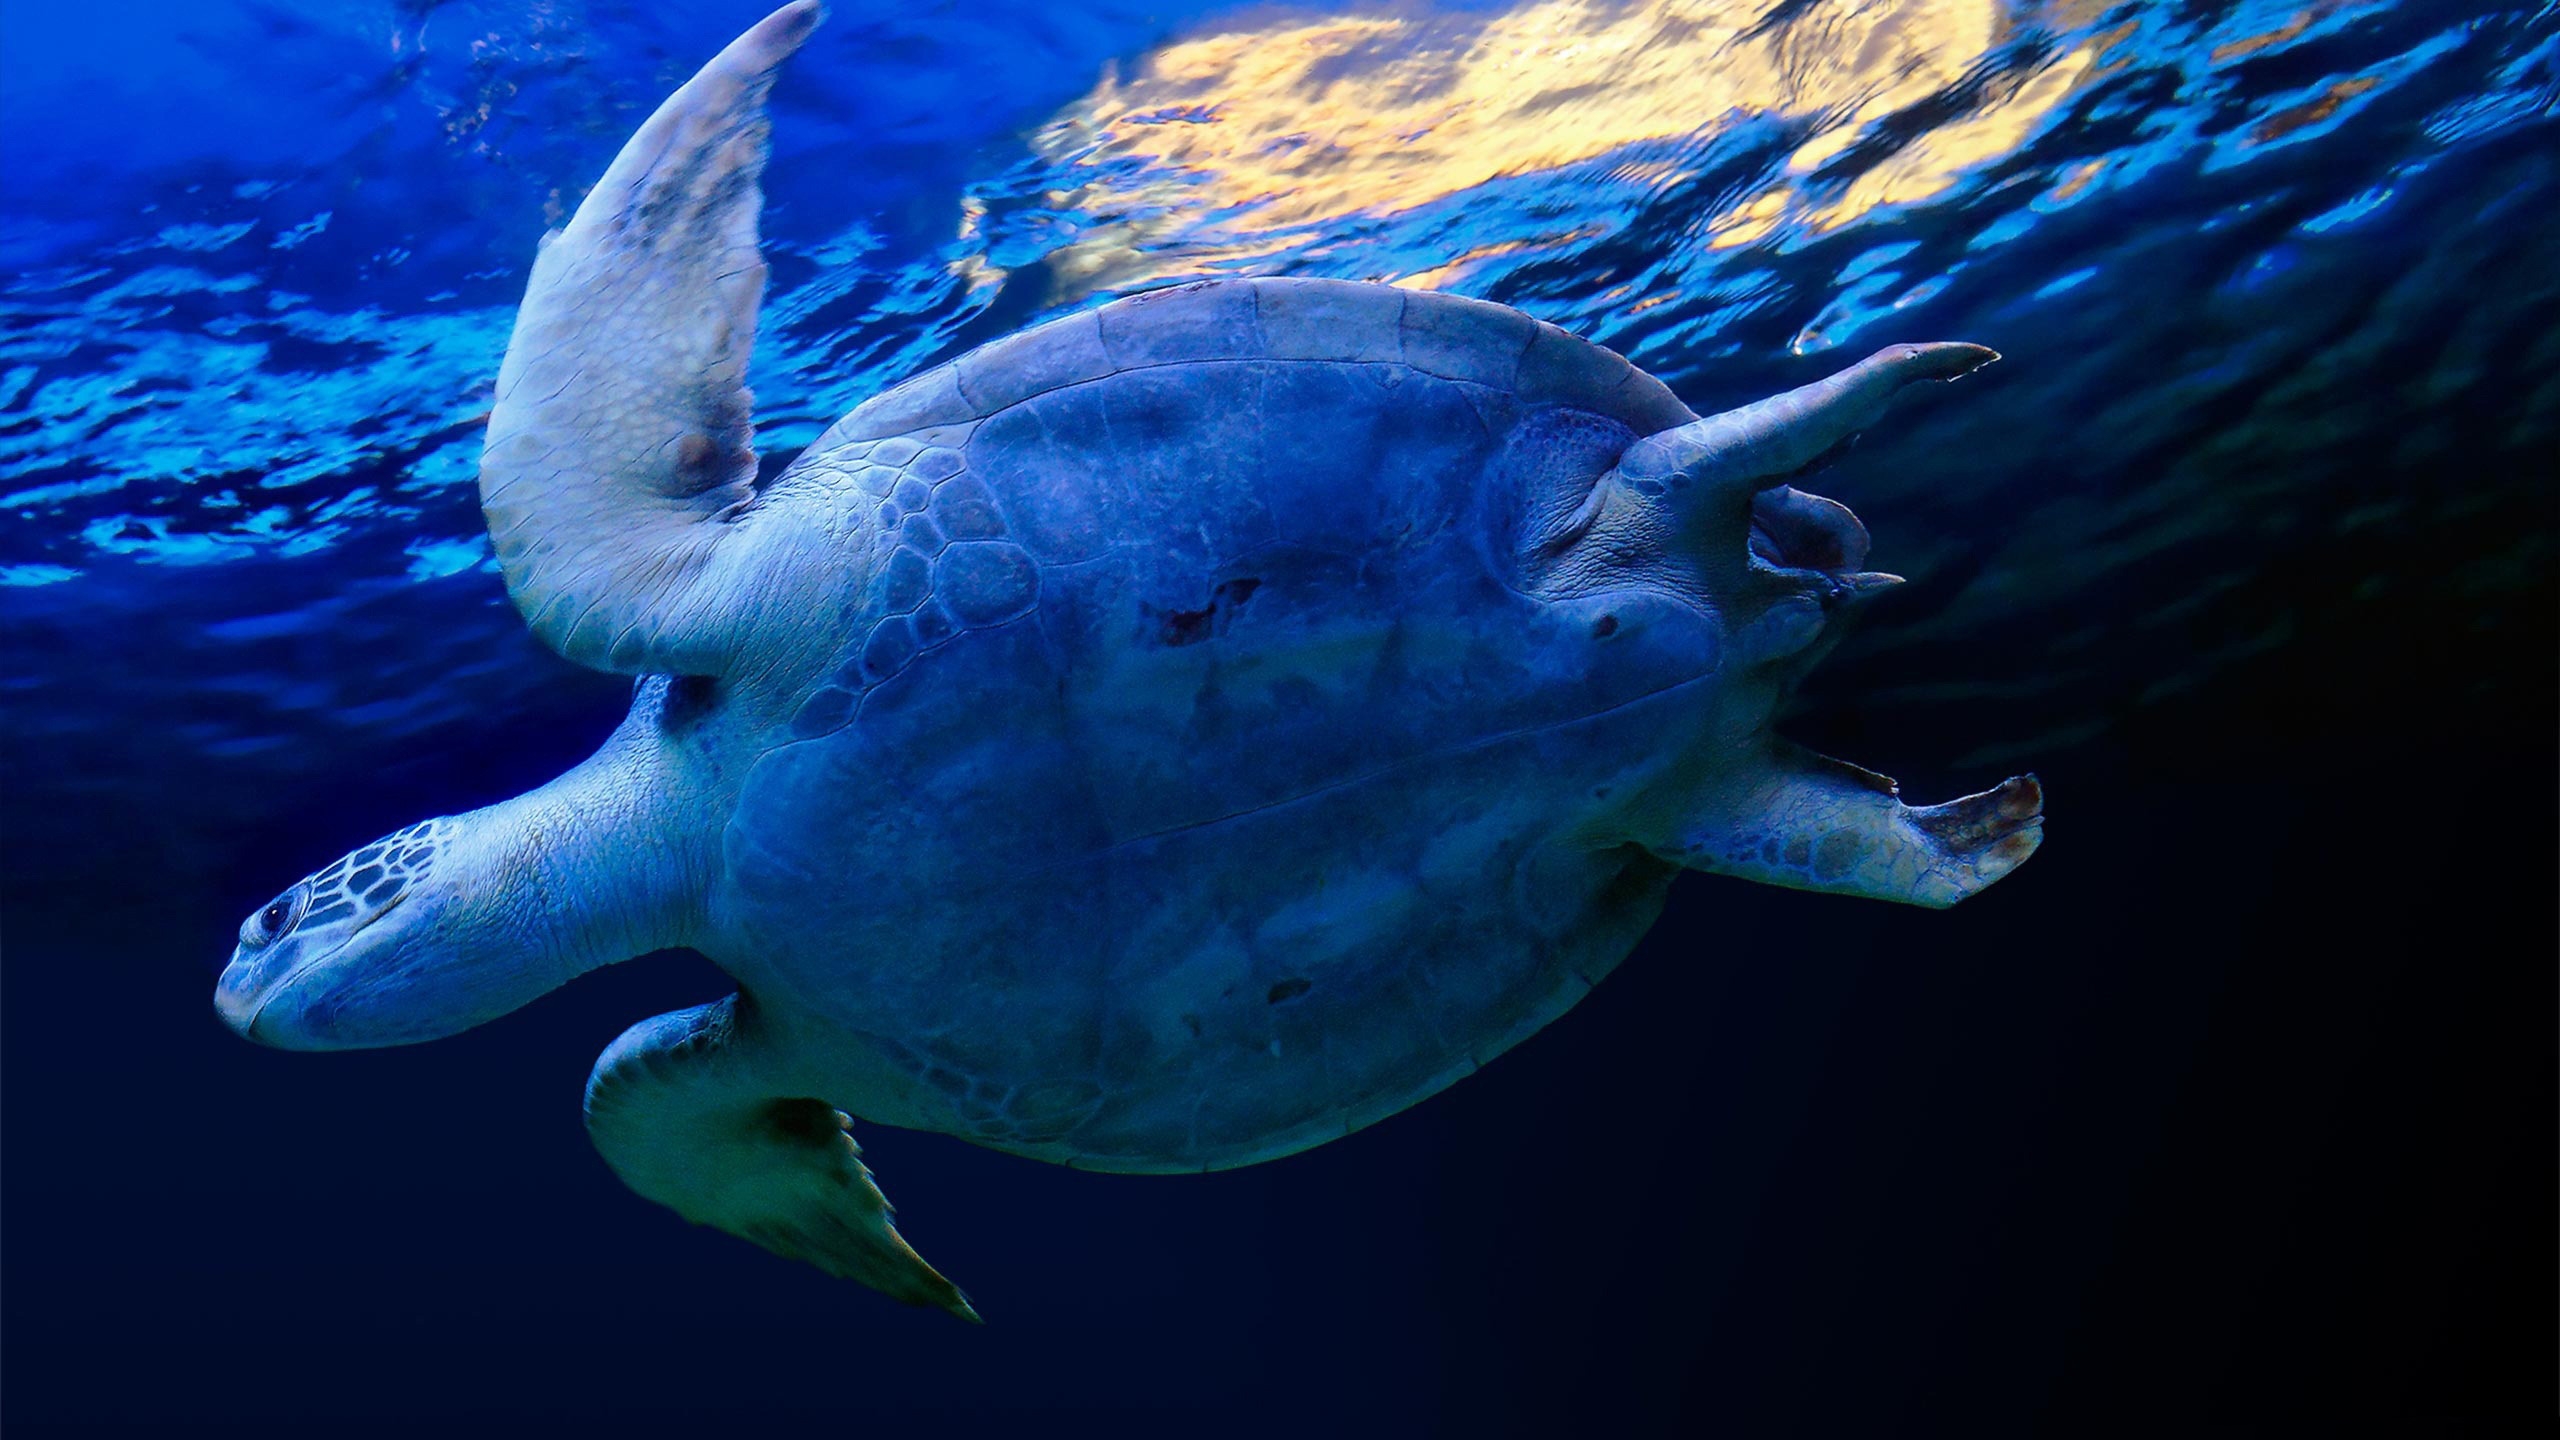 Swimming Sea Turtle for 2560x1440 HDTV resolution